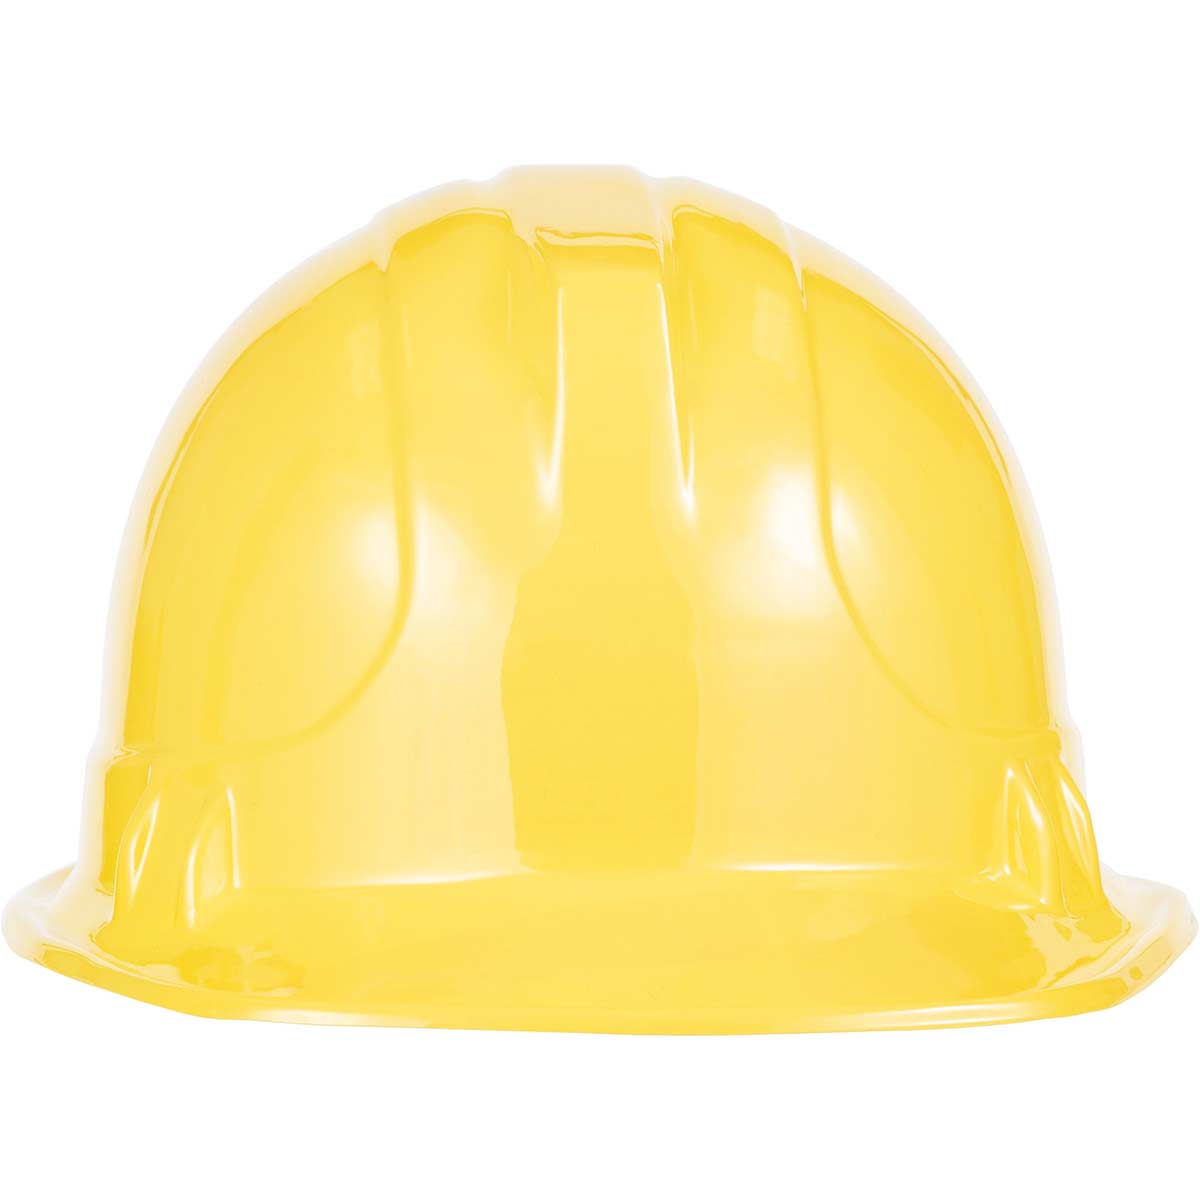 CREATIVE CONVERTING Kids Birthday Yellow Plastic Construction Hat for Kids